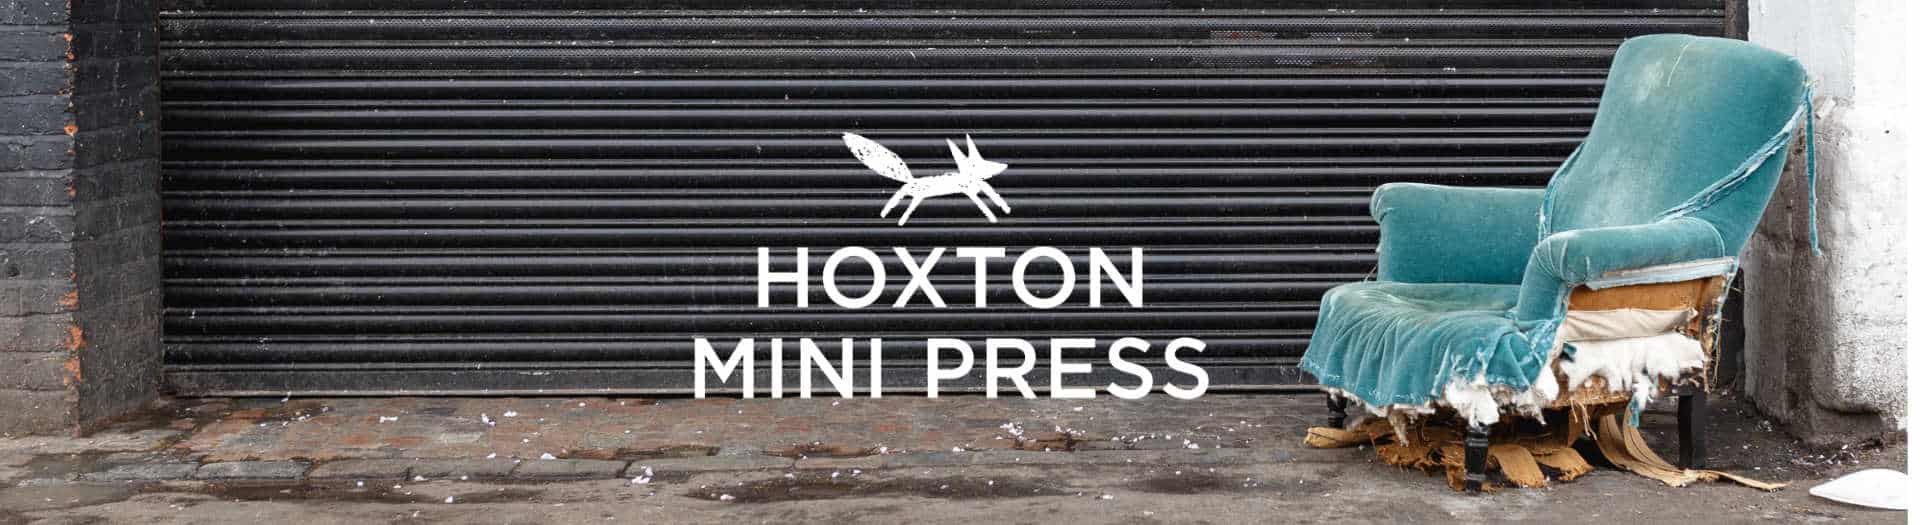 hoxton mini press